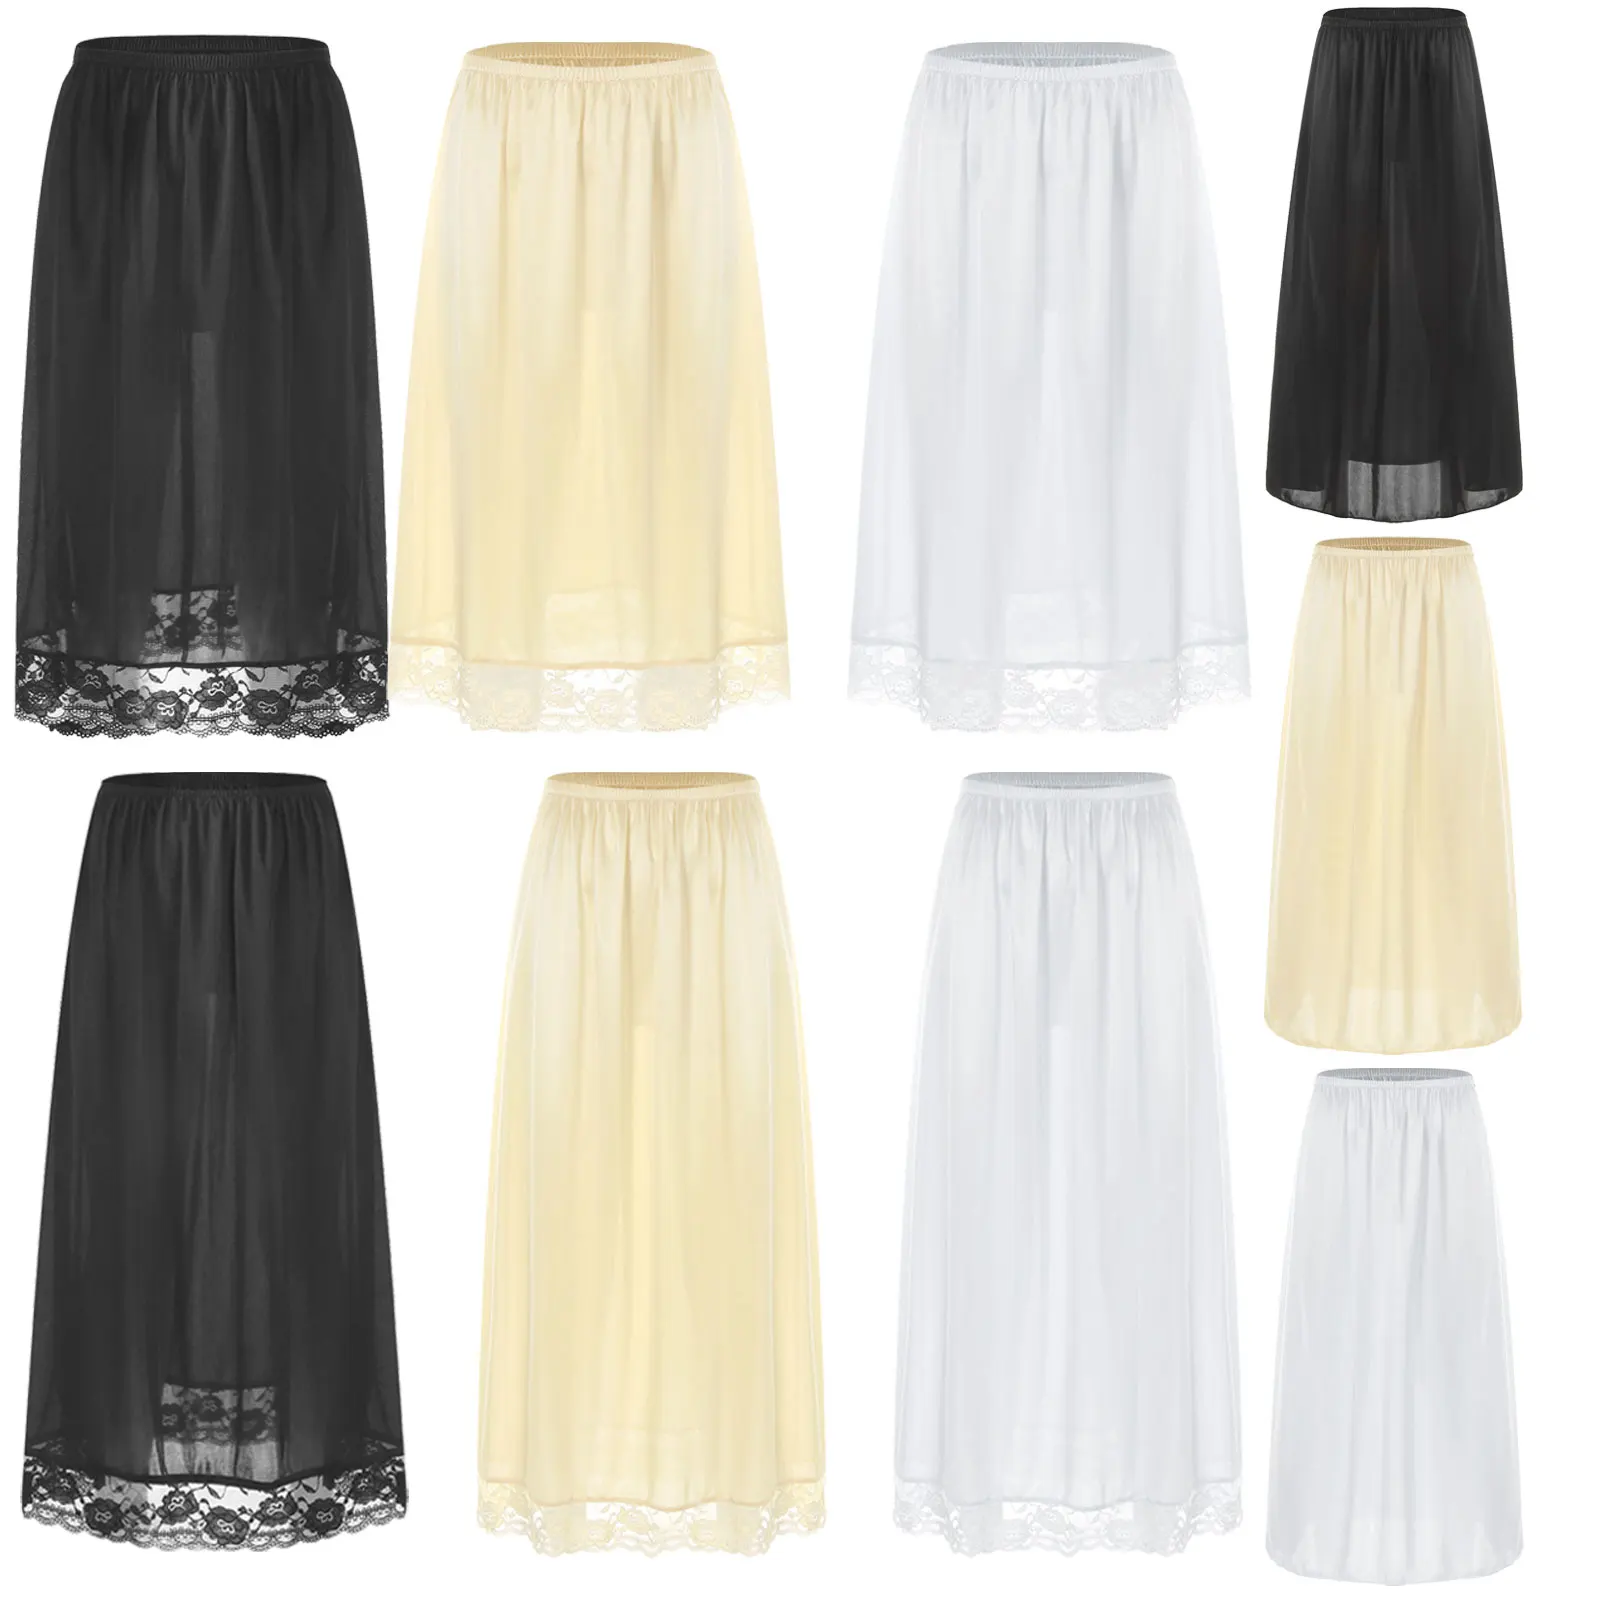 

Lining Skirt Anti Stati Half Length Underskirt for Dress Bottom Safety Skirt Hanfu Petticoat Thin Half Slip Safety Under Dress